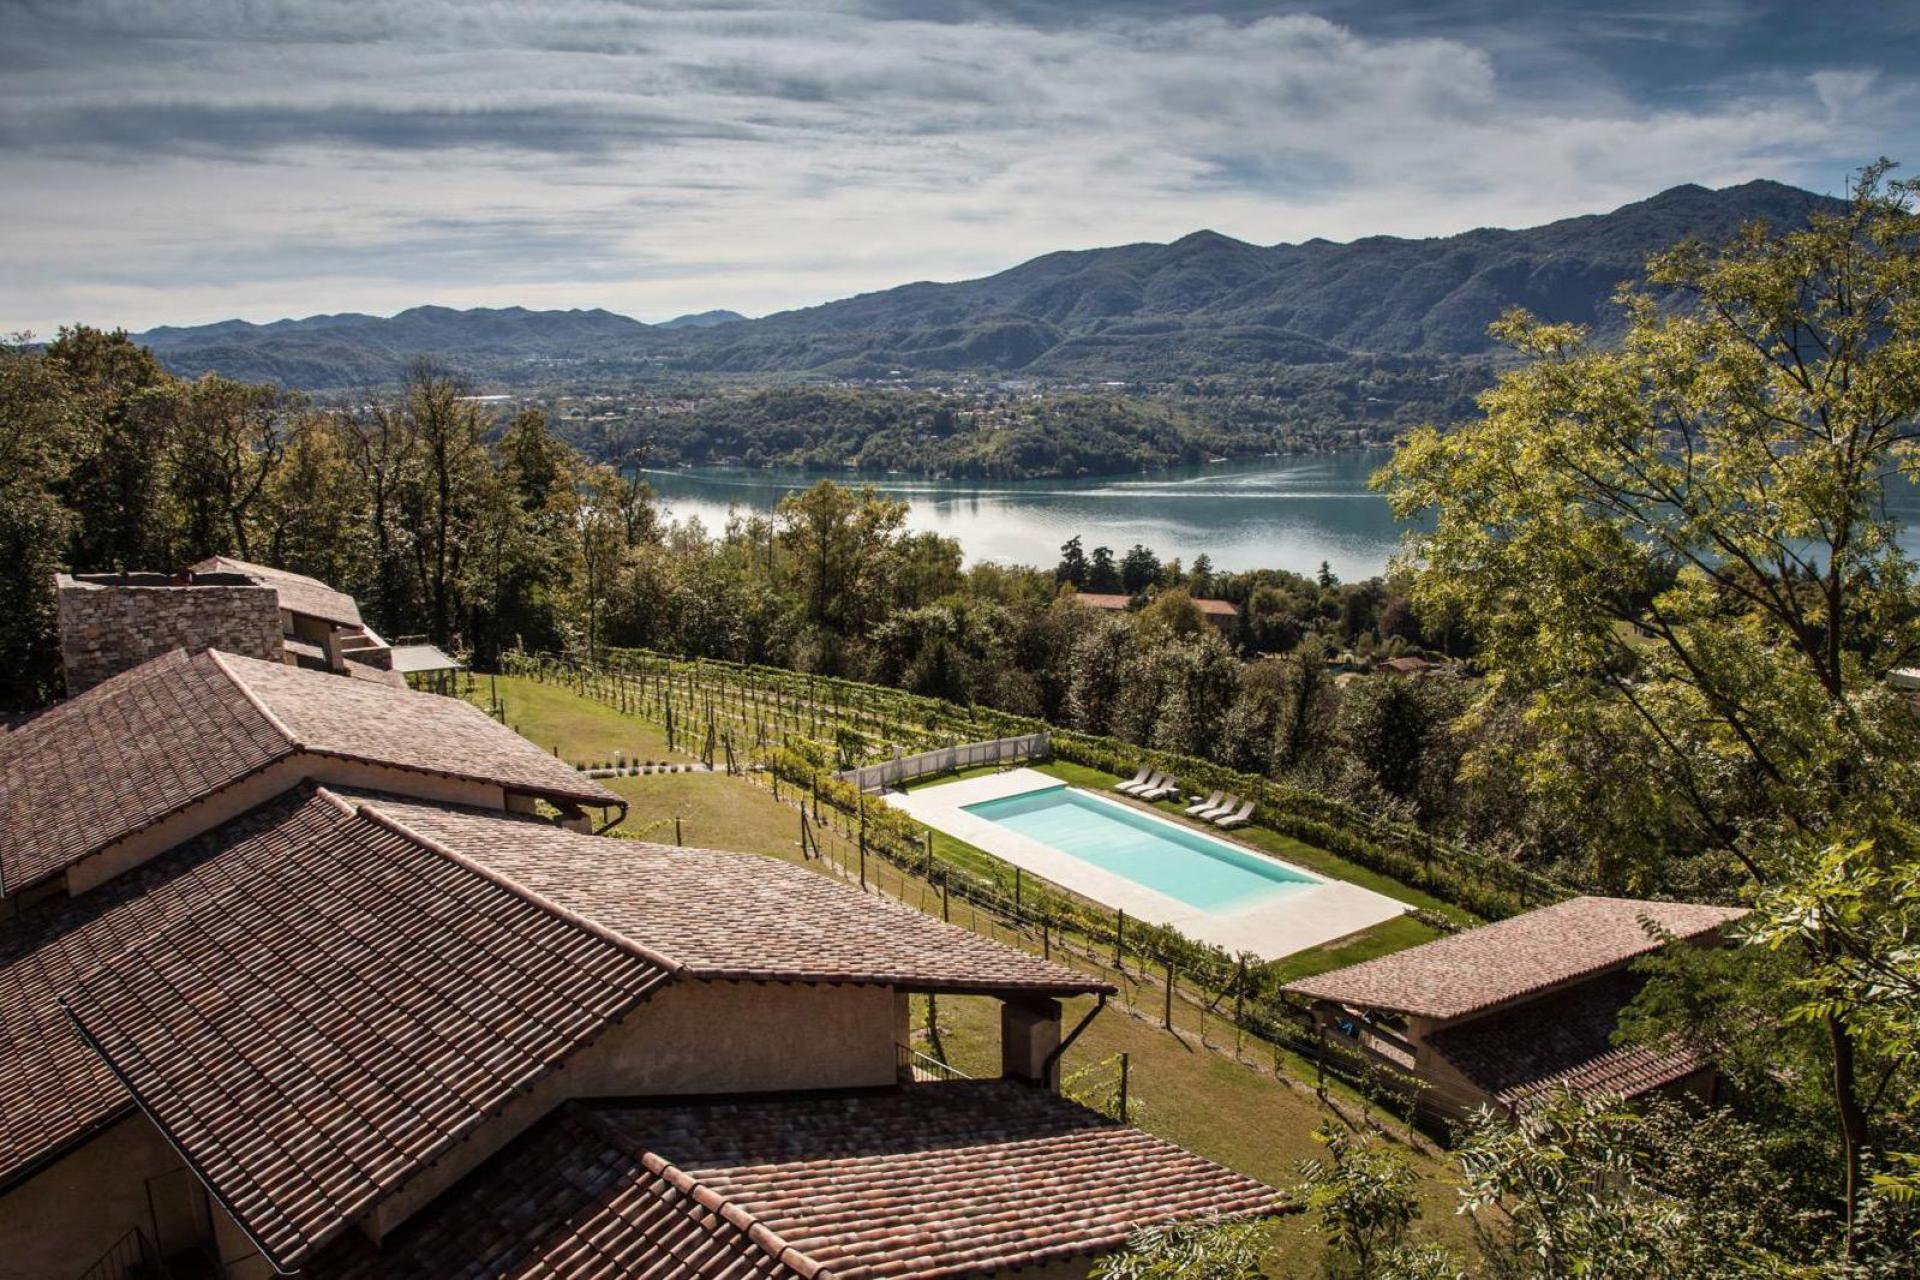 Agriturismo Lake Como and Lake Garda Agriturismo Lake Maggiore with outstanding views